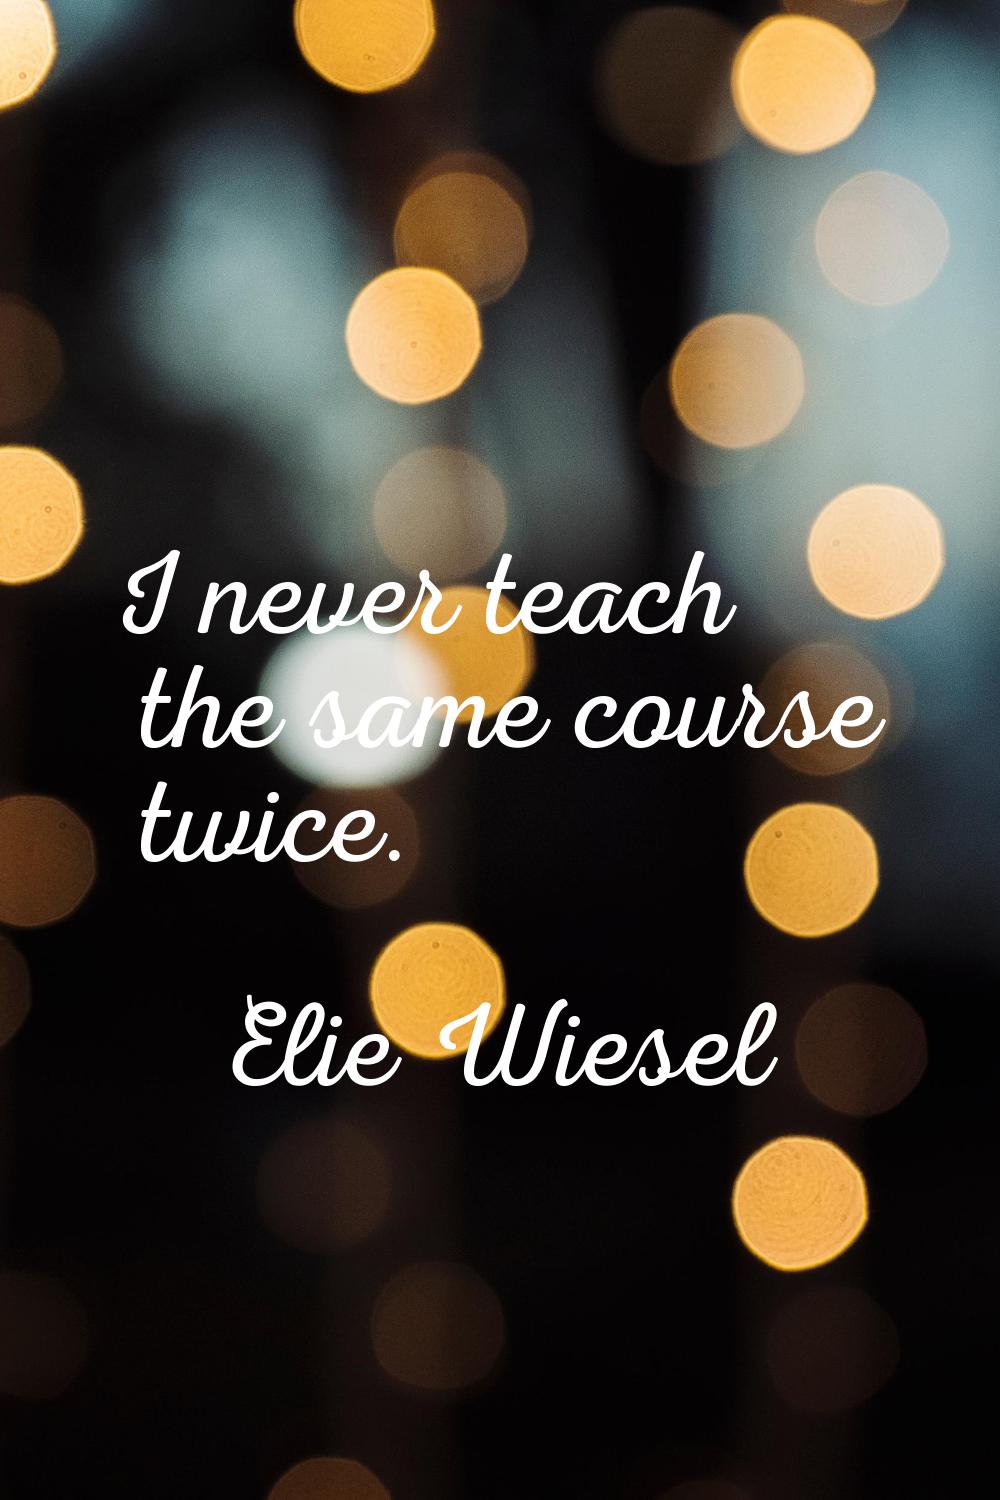 I never teach the same course twice.